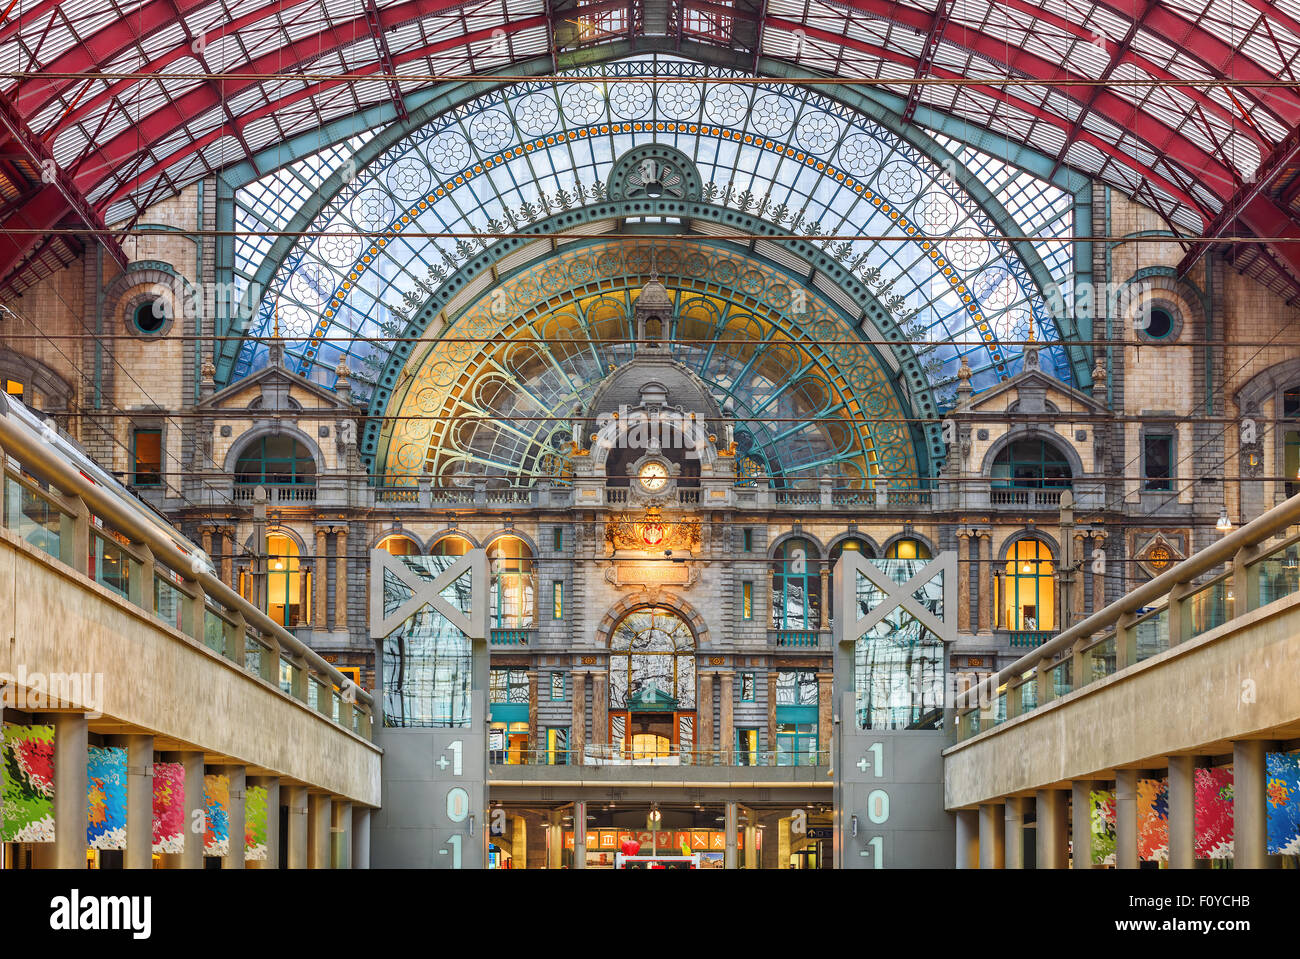 Interior of amazing central railway station in Antwerpen, Belgium Stock Photo